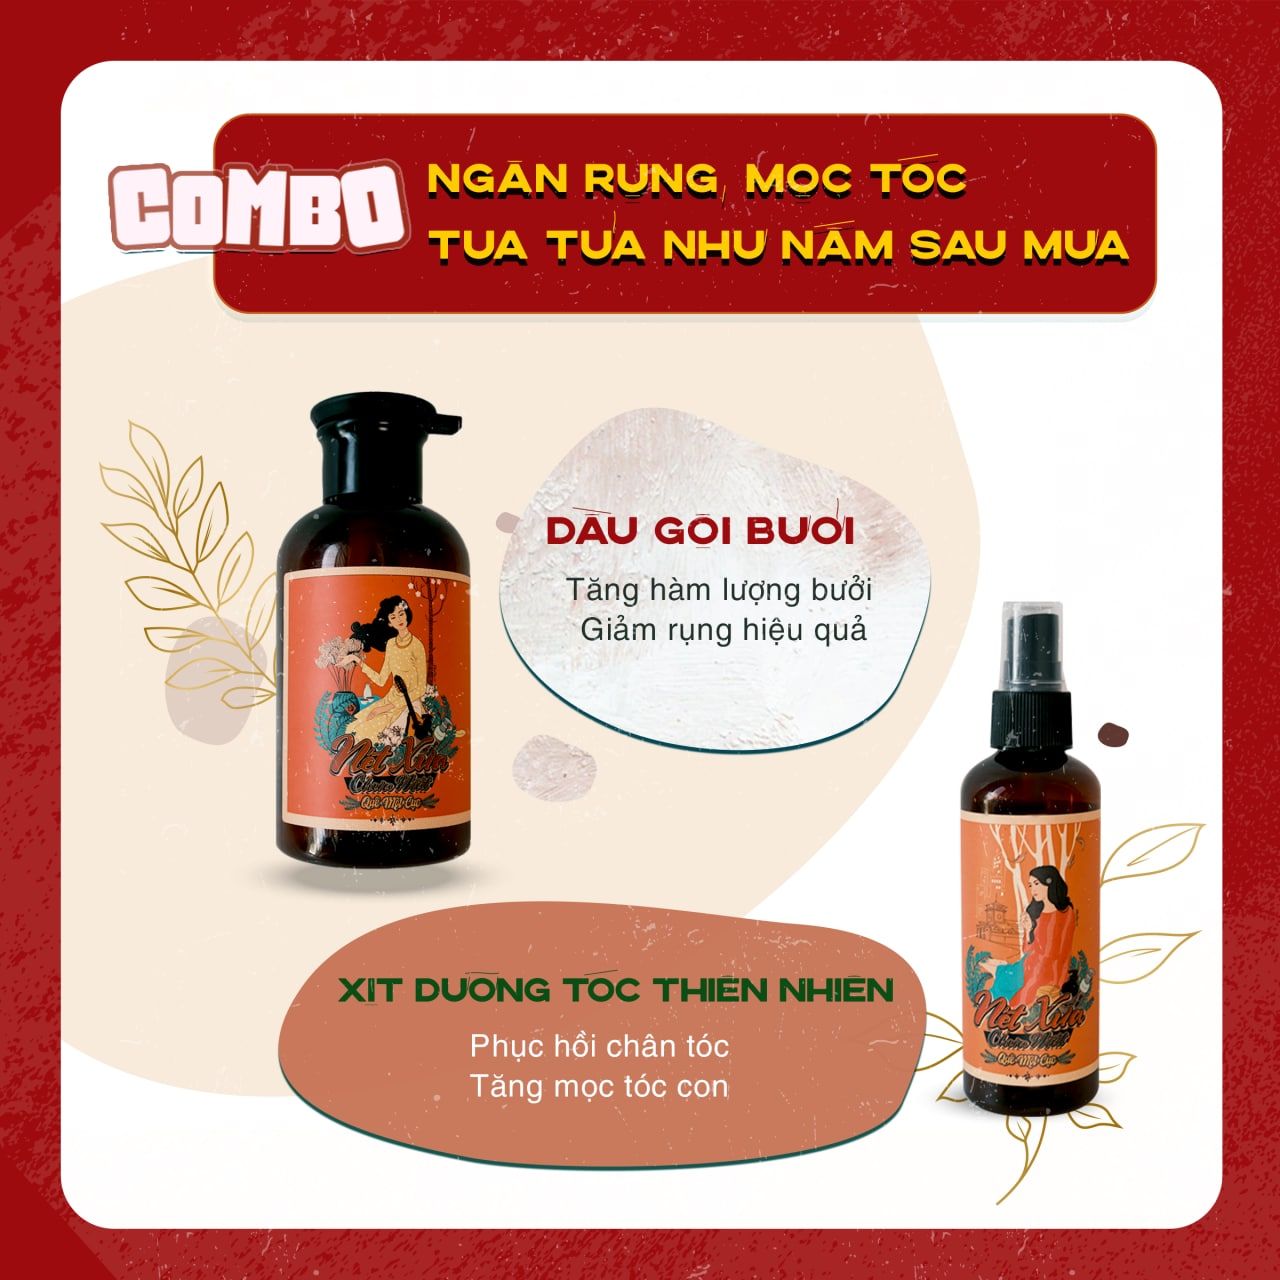  Dầu Gội Lành - Quê Signature Shampoo 350ml 